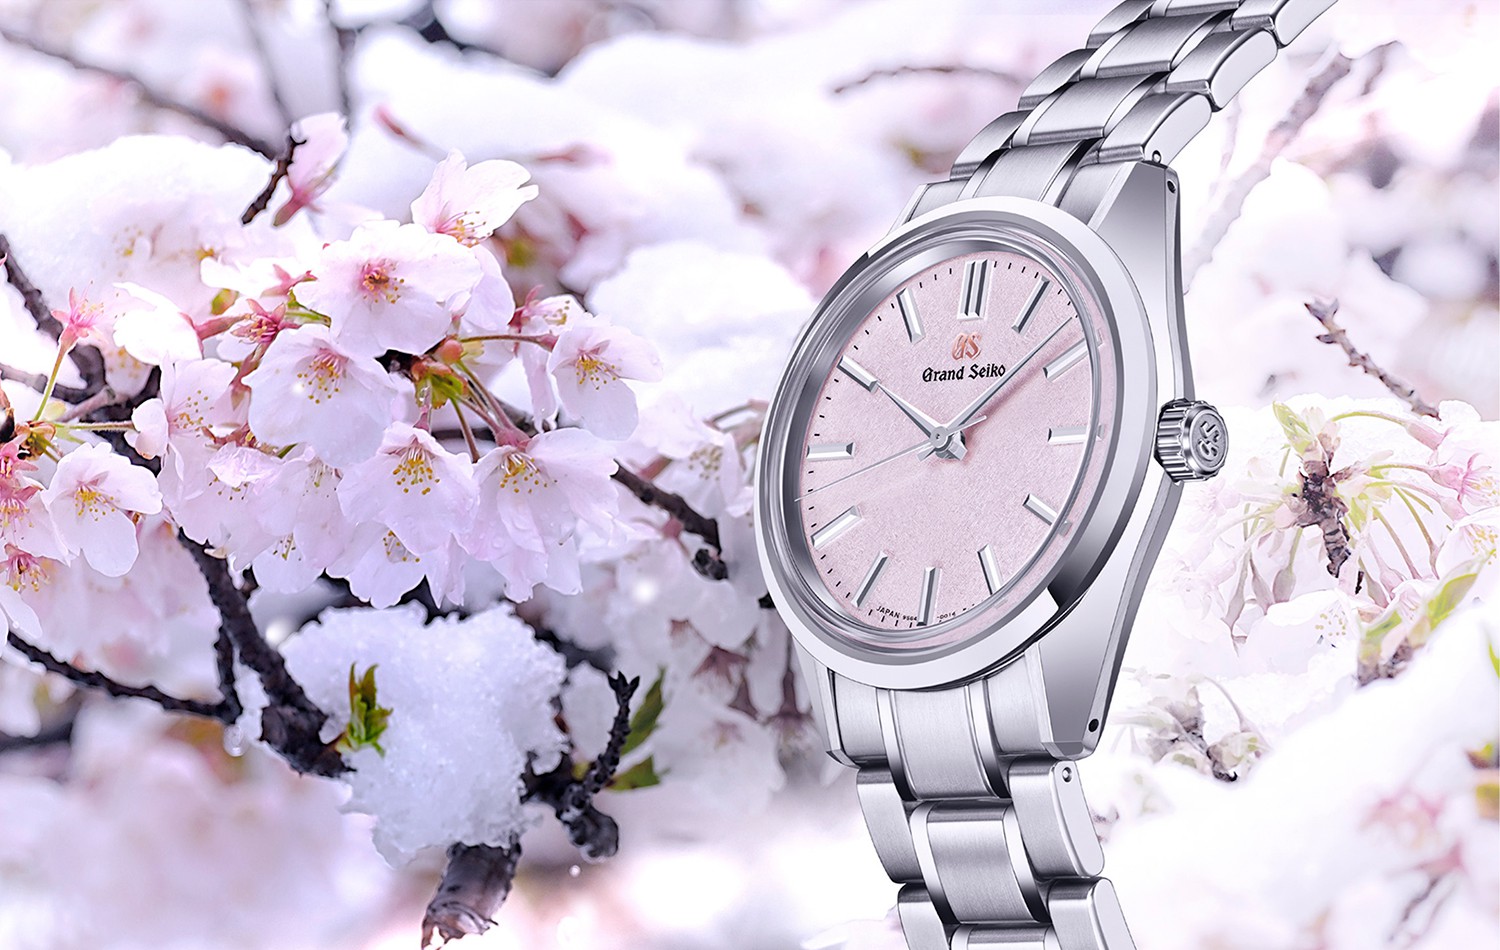 Sakura, spring and snow. Nature at its most inspirational. | Grand Seiko